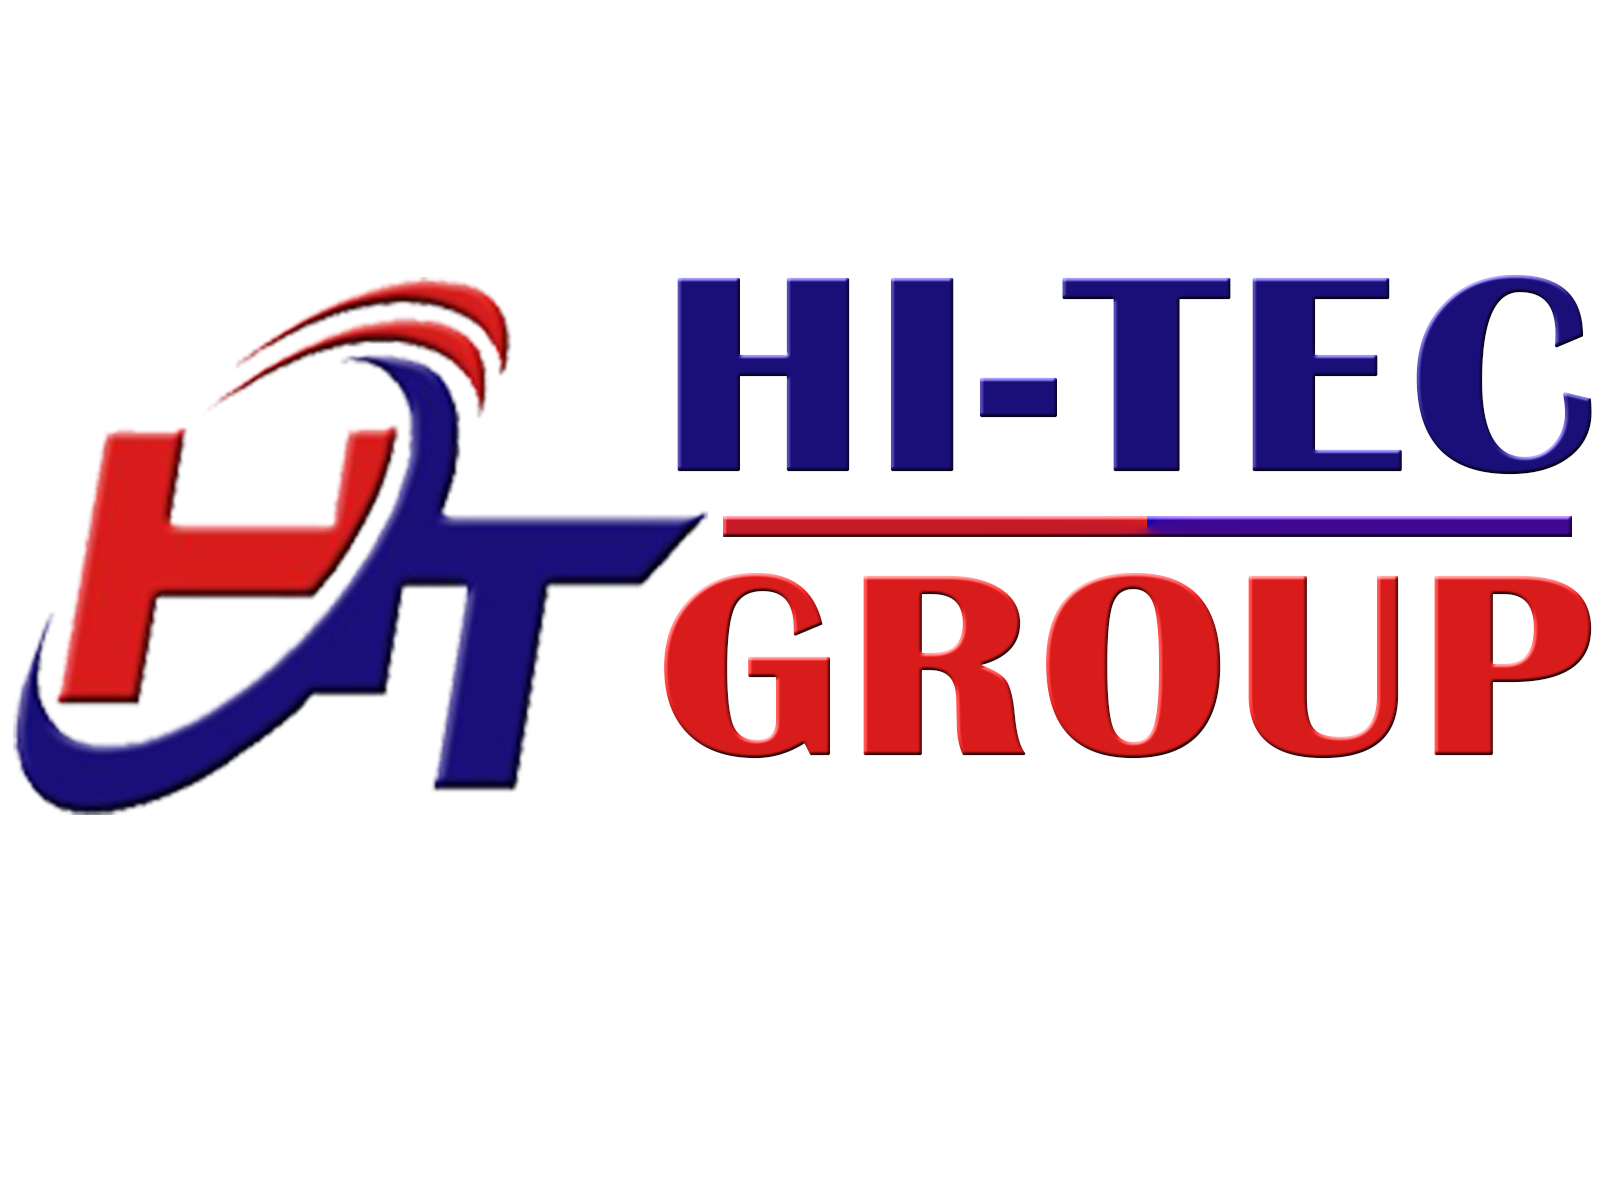 Hitec embro group